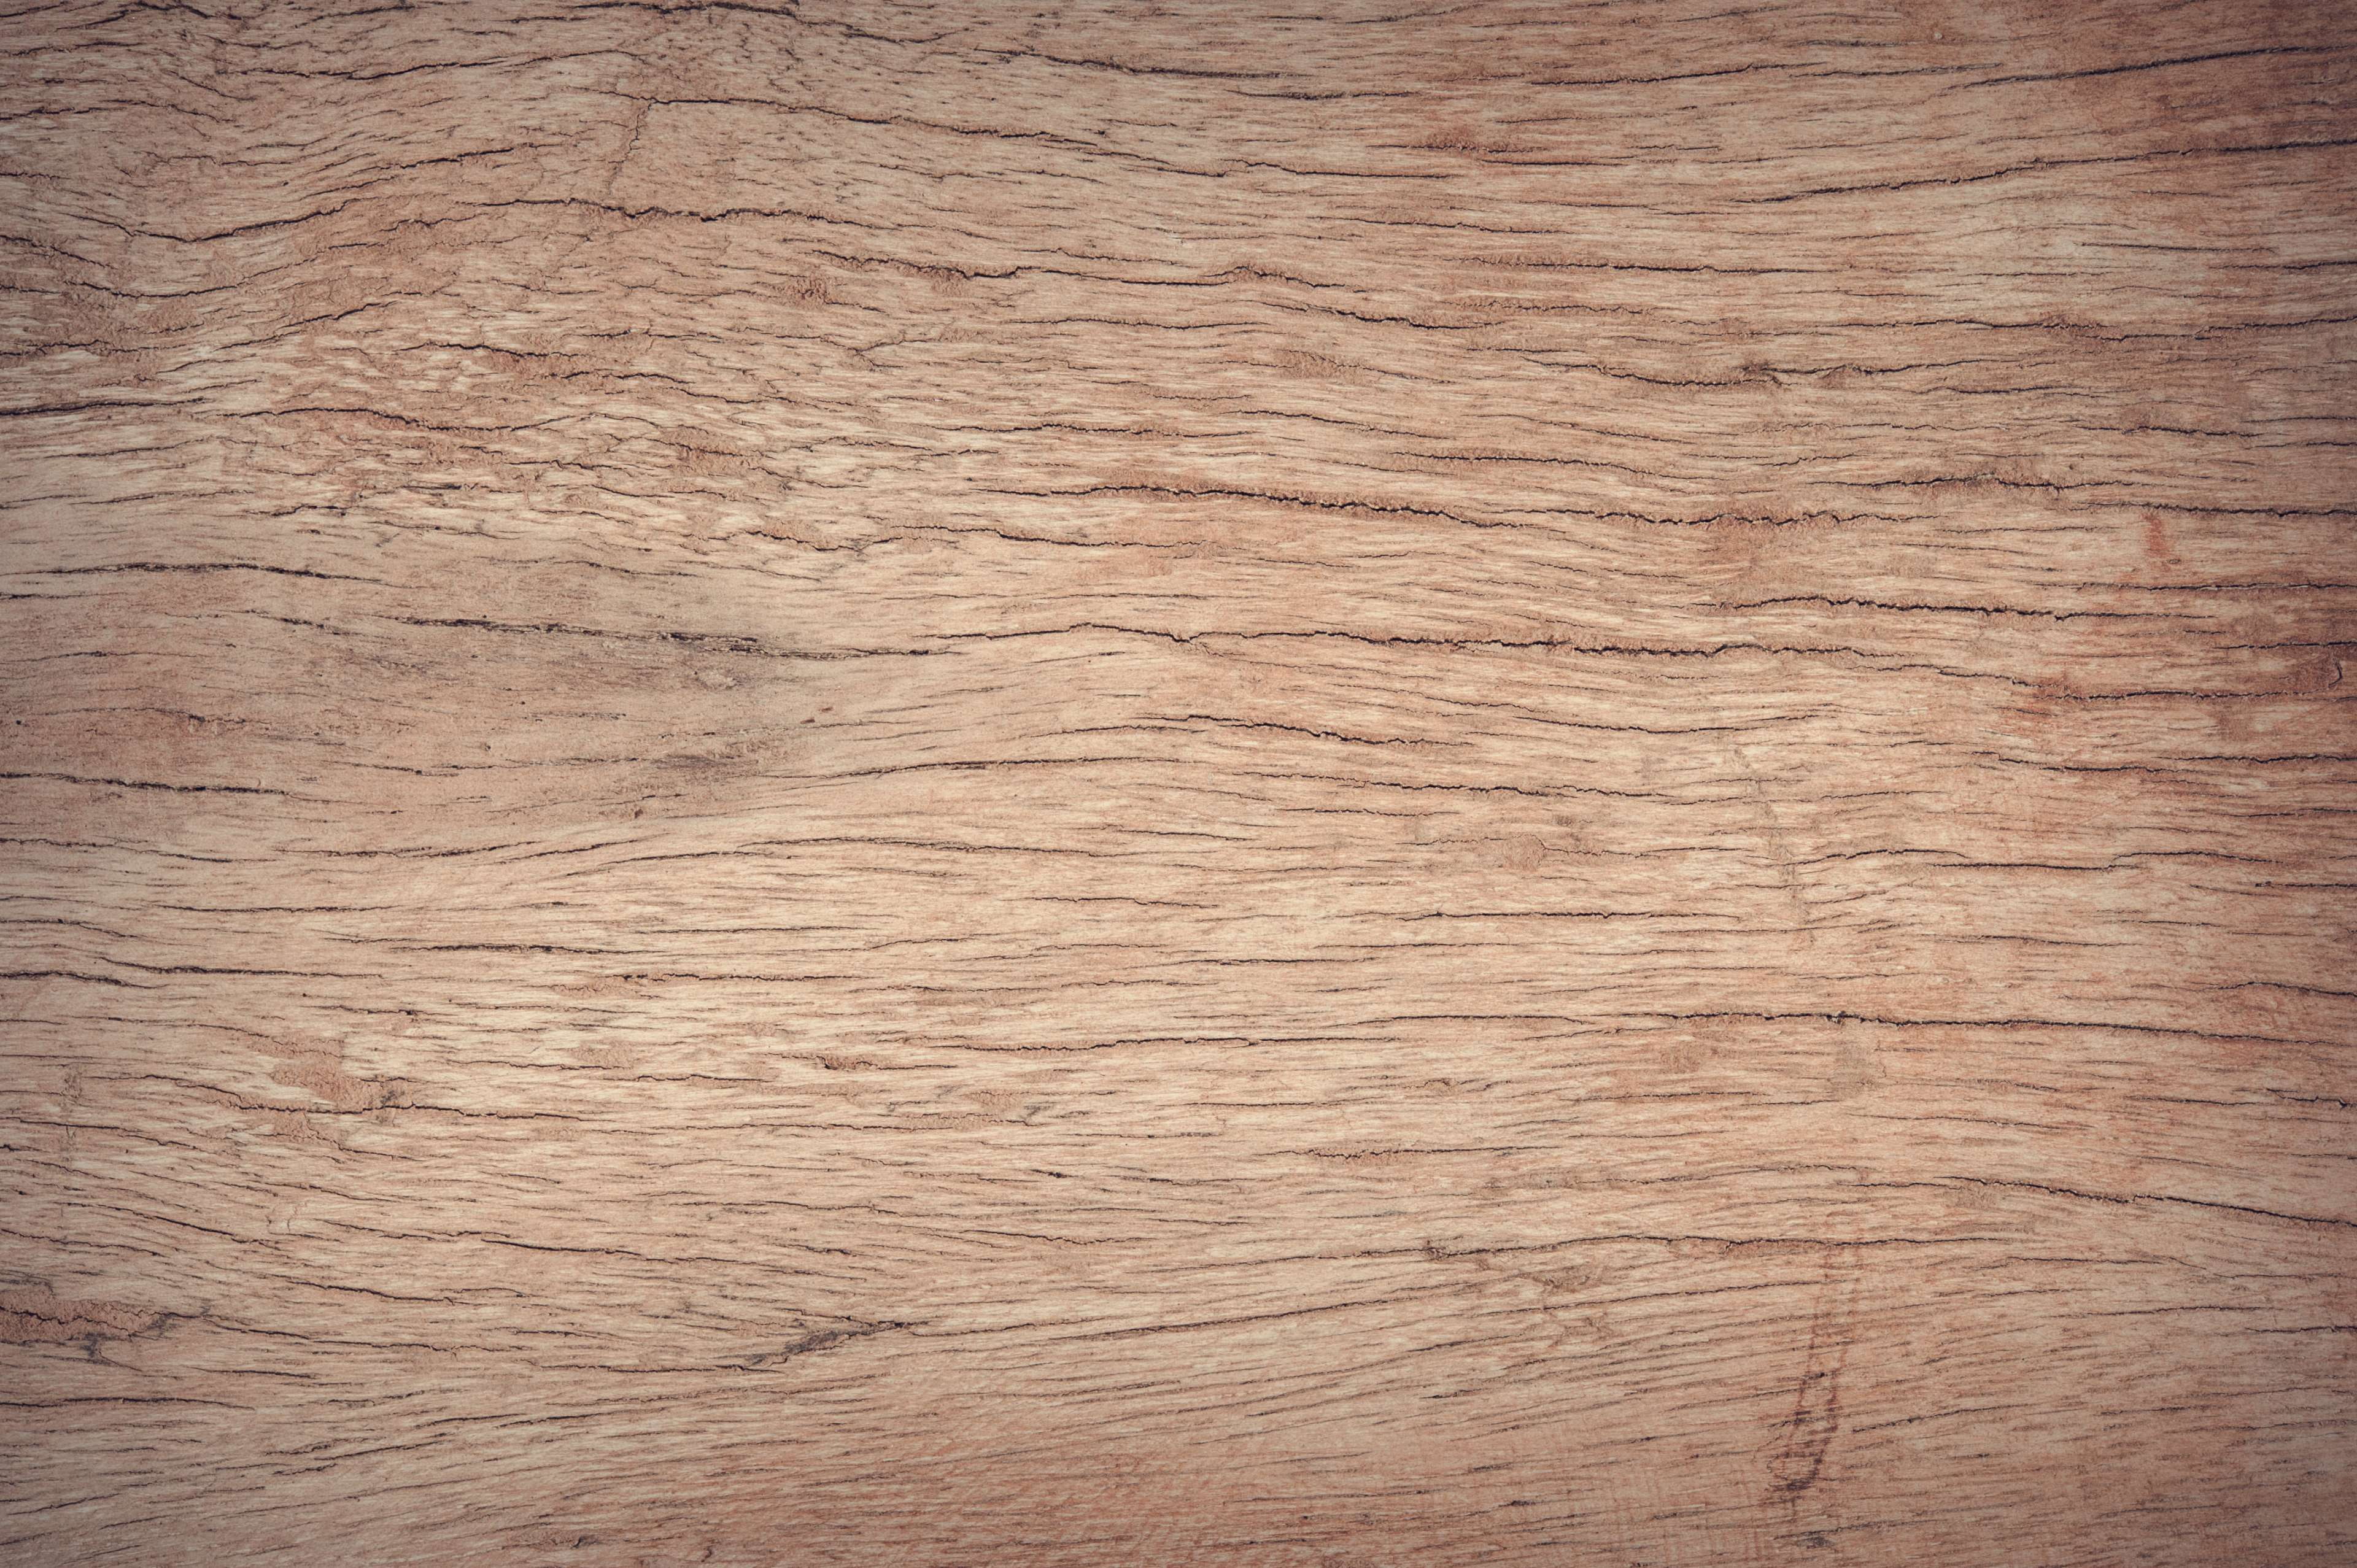 board, brown, dried, hardwood, interior, lumber, panel, rough